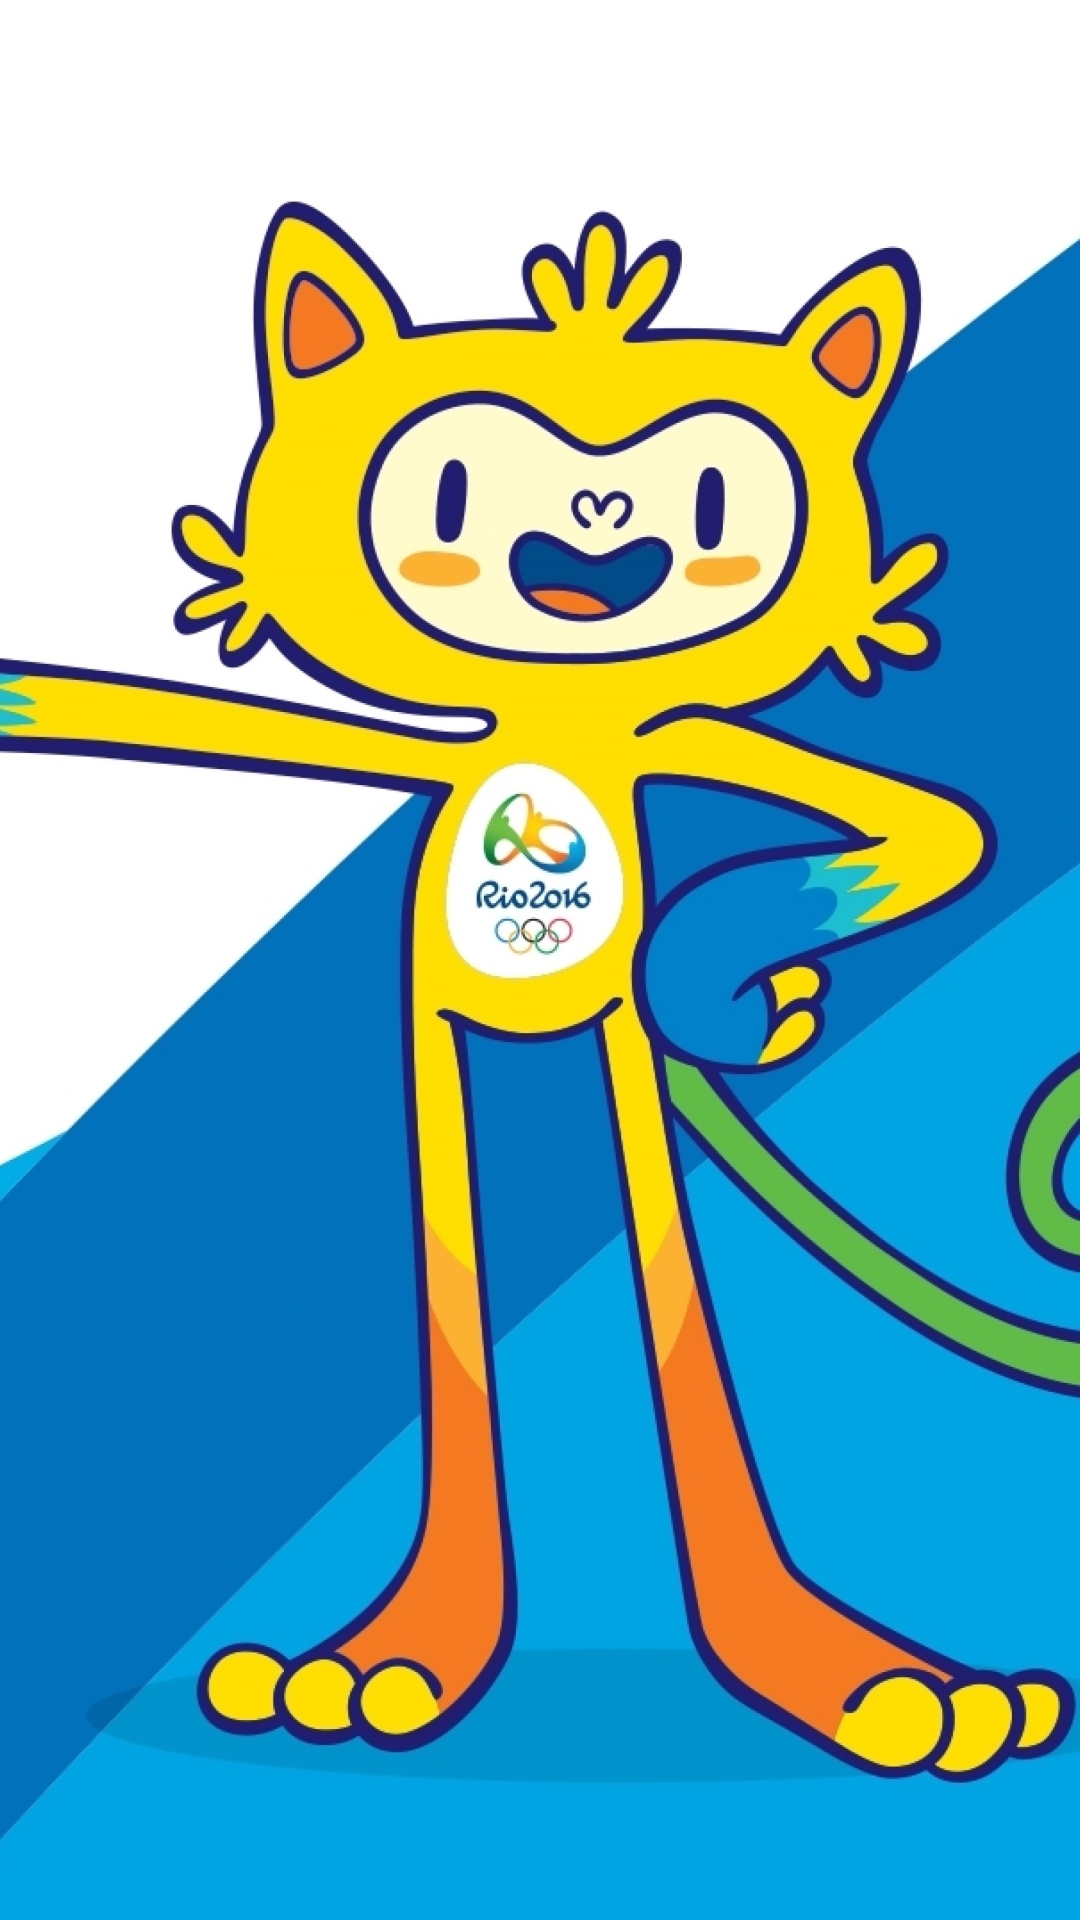 Das Olympics Mascot Vinicius Rio 2016 Wallpaper 1080x1920